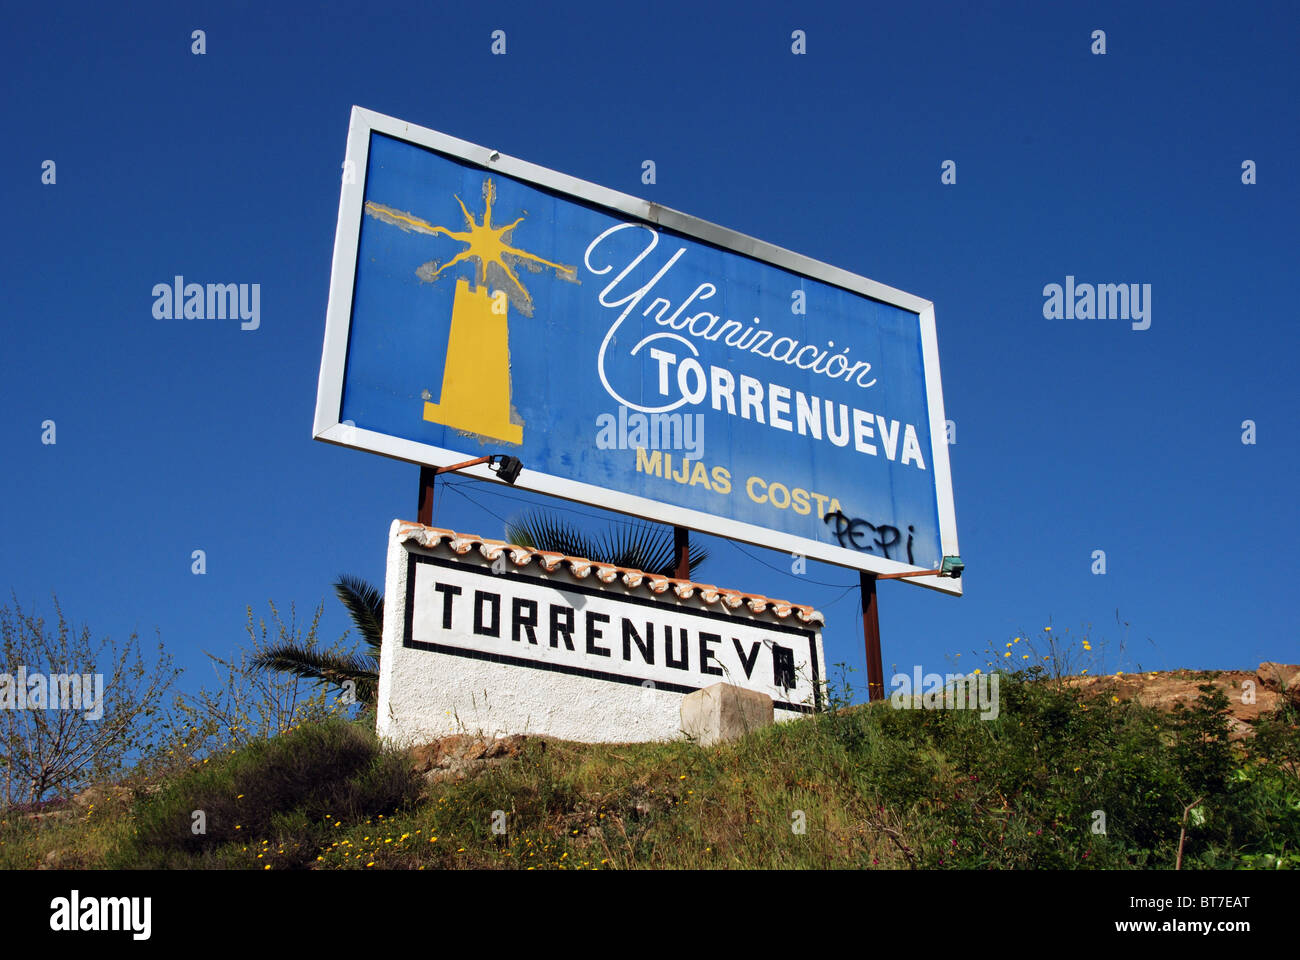 Urbanisation signs, Torrenueva, Mijas Costa, Costa del Sol, Malaga Province, Andalucia, Spain, Western Europe. Stock Photo